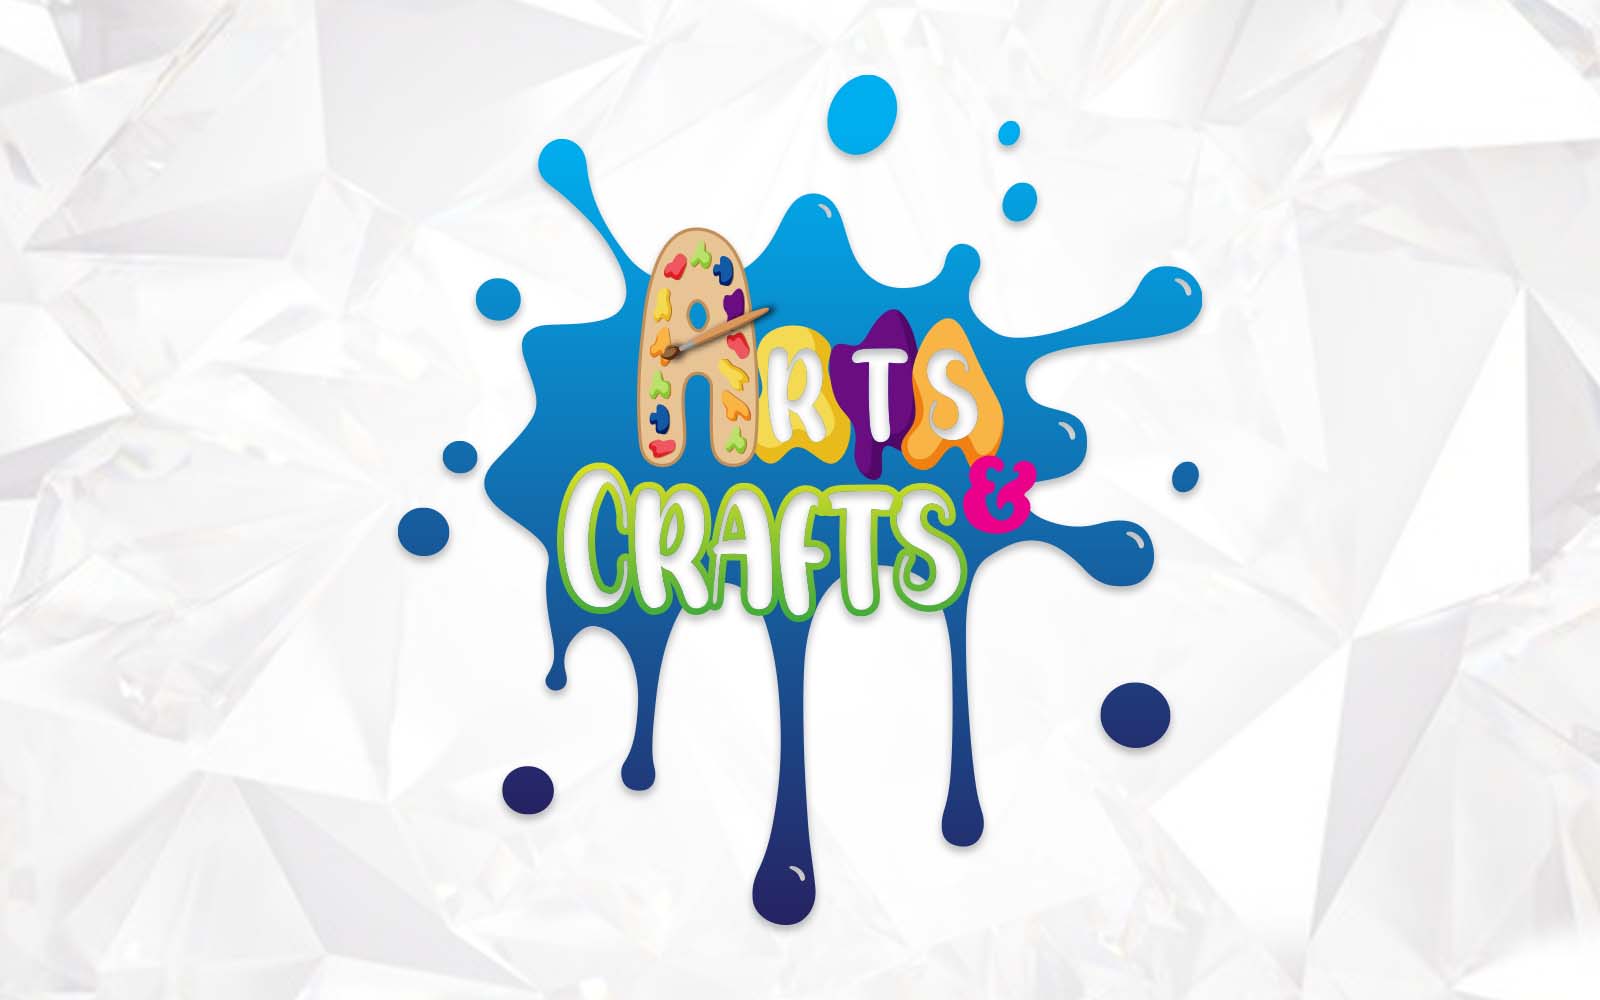 Professional Arts And Crafts Creative Logo Design - Brand Identity